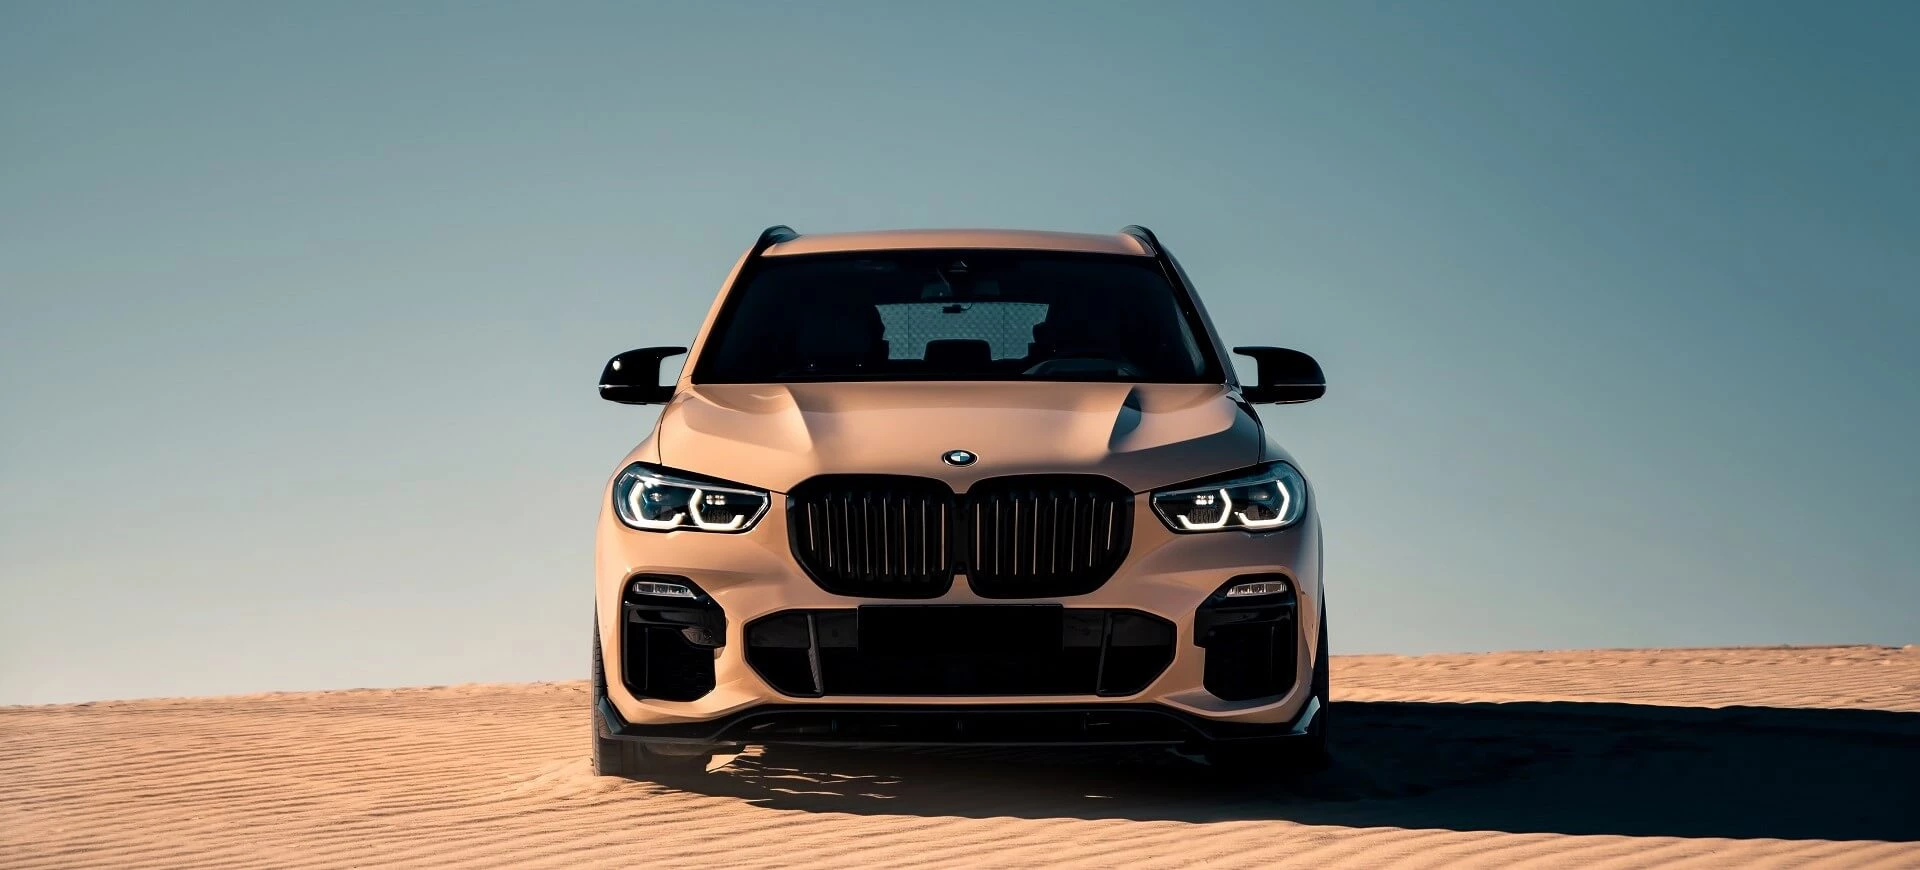 BMW X5 Piedra del sol